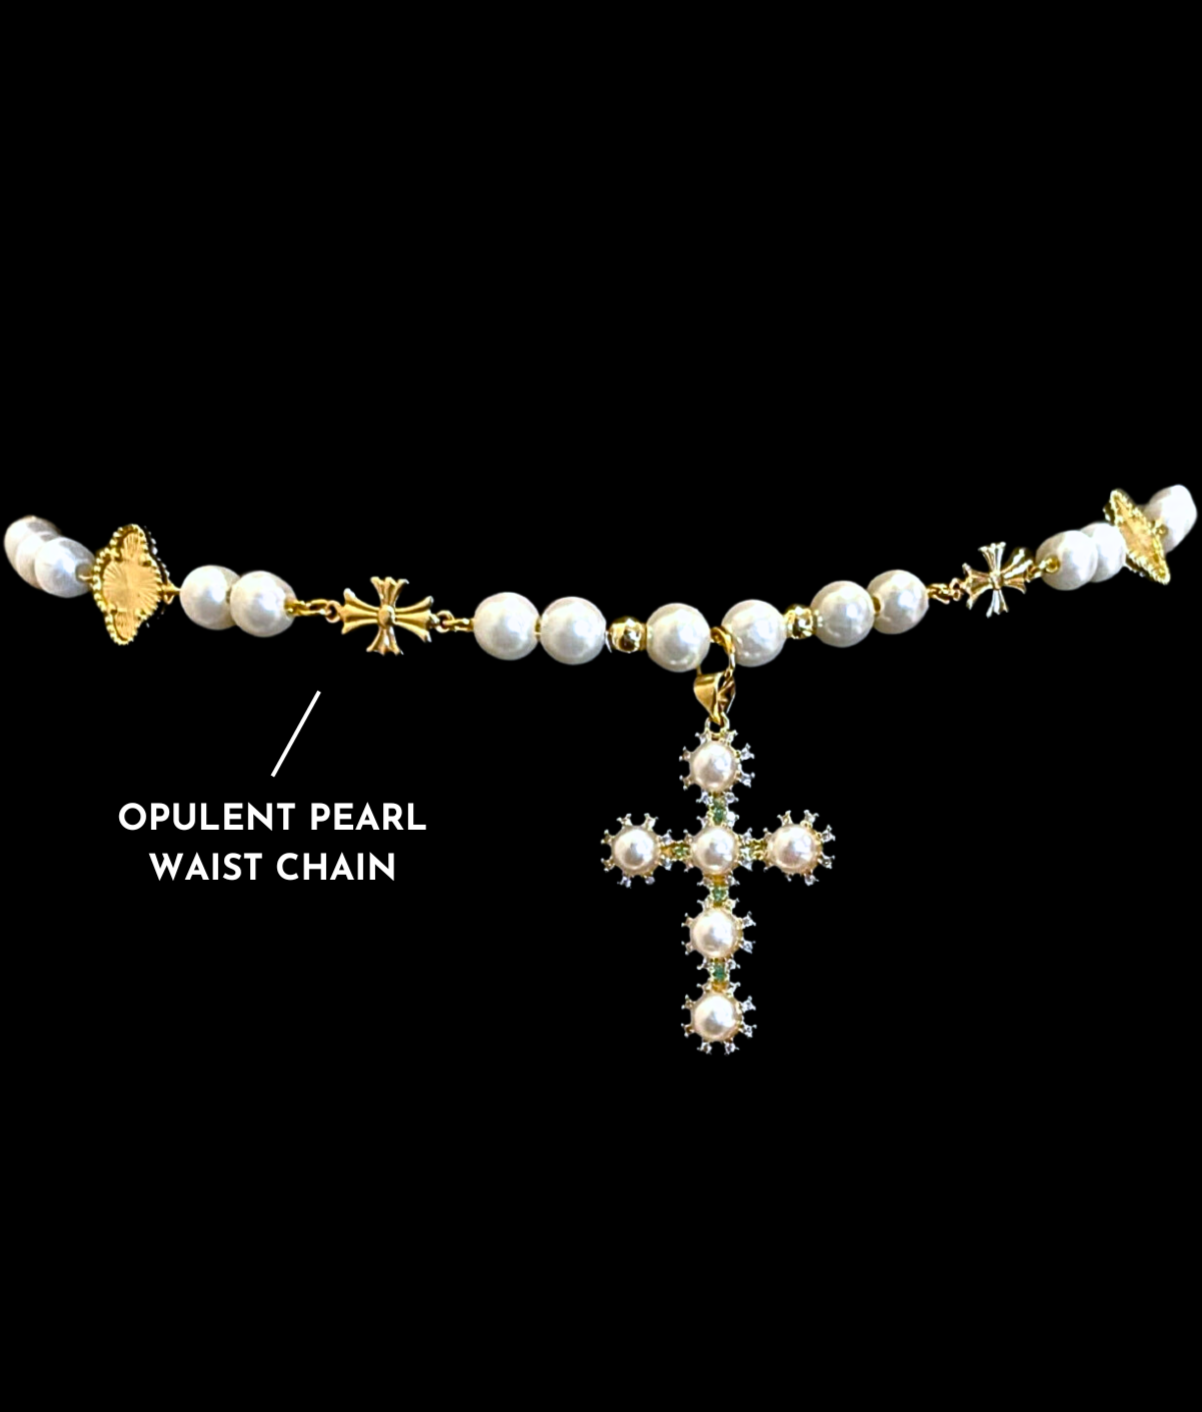 Opulent Pearl Waist Chain